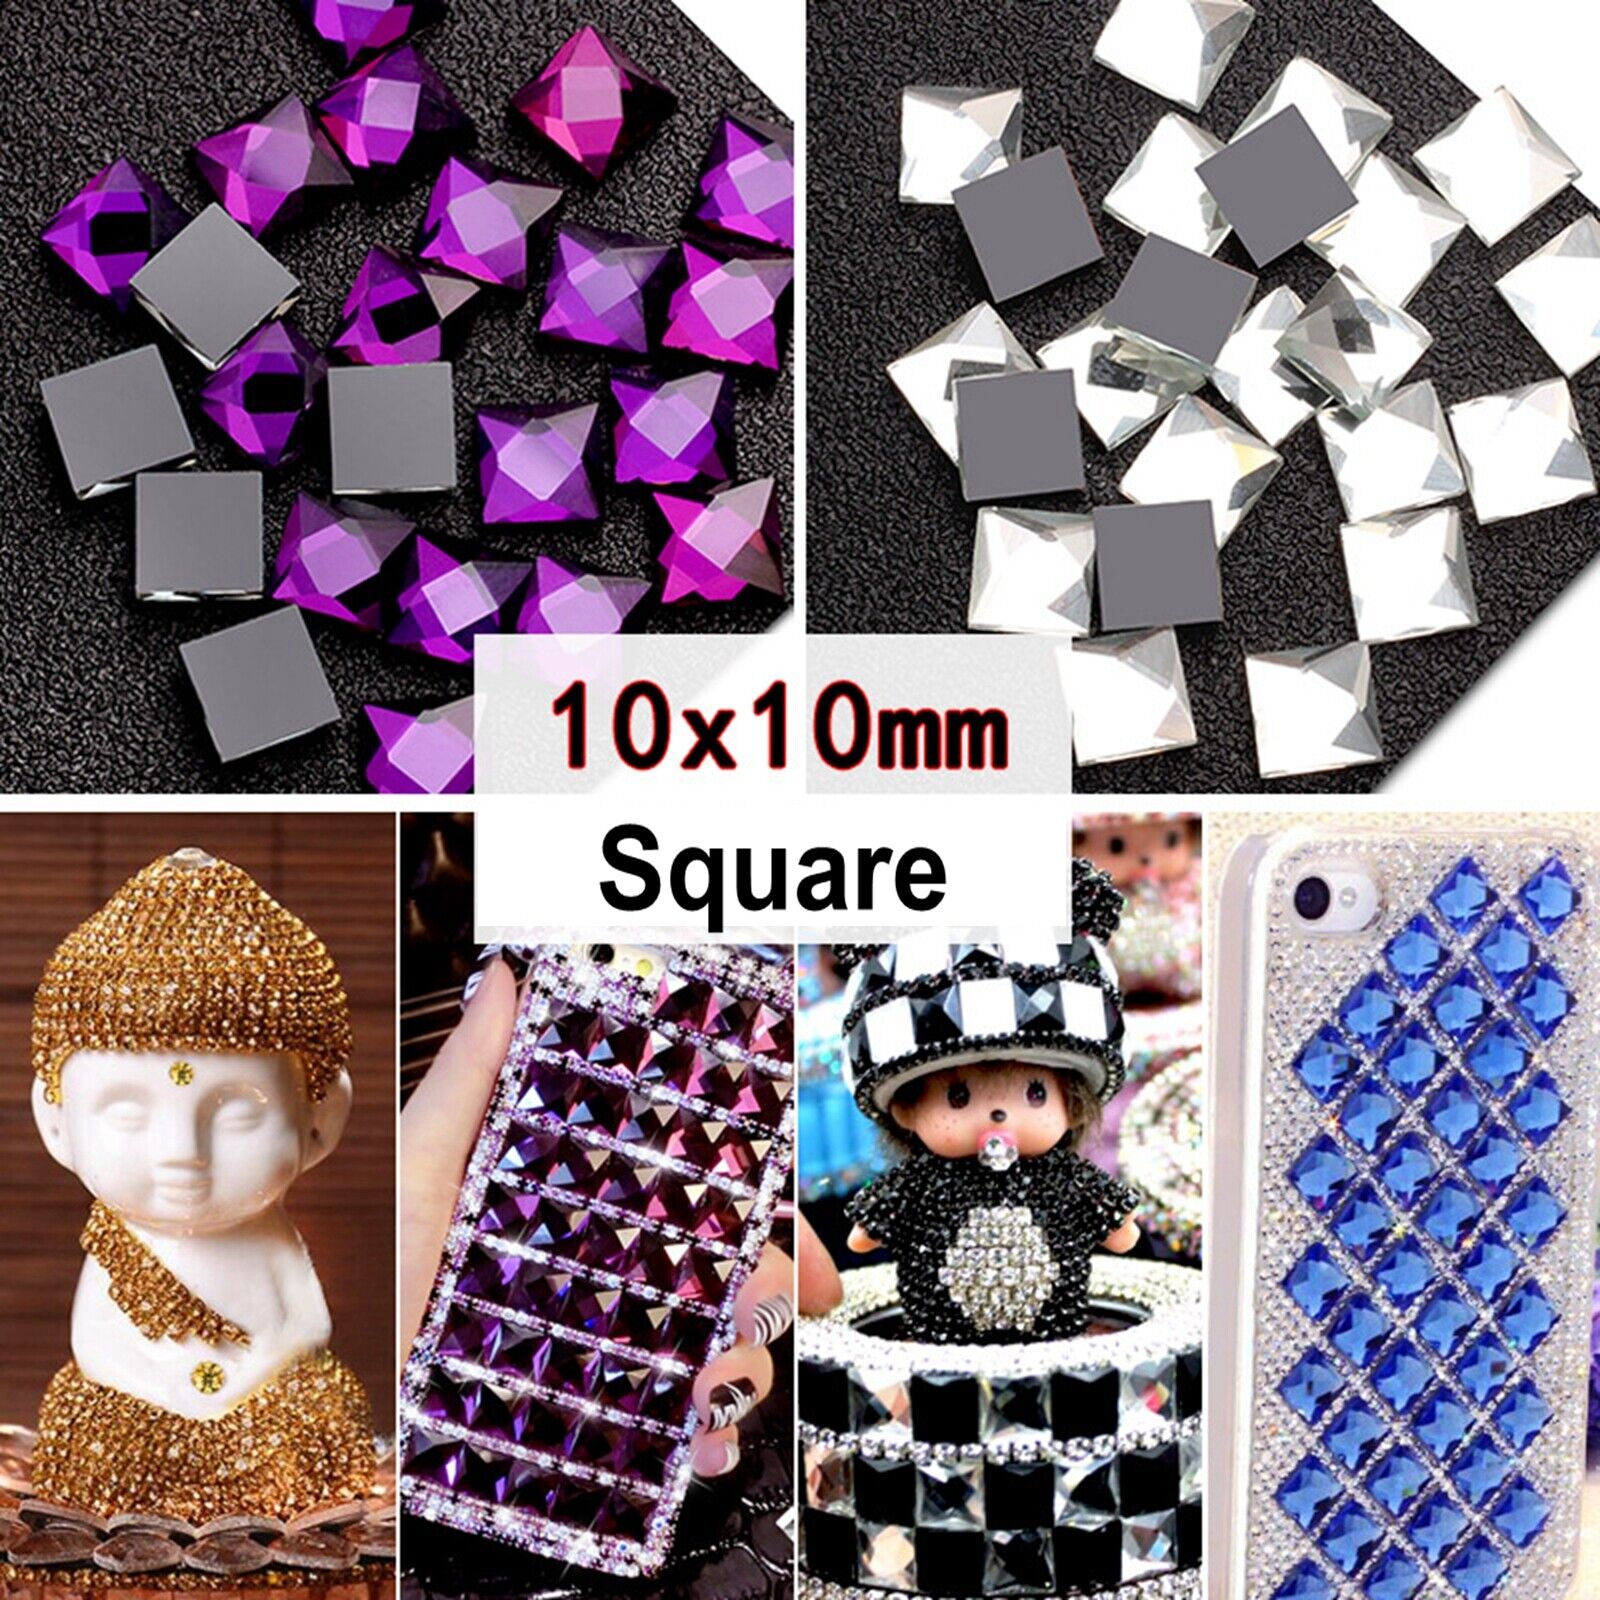 100 Faceted Square Flatback Glass Crystal Rhinestone Gem 10x10mm Craft Tiles Art